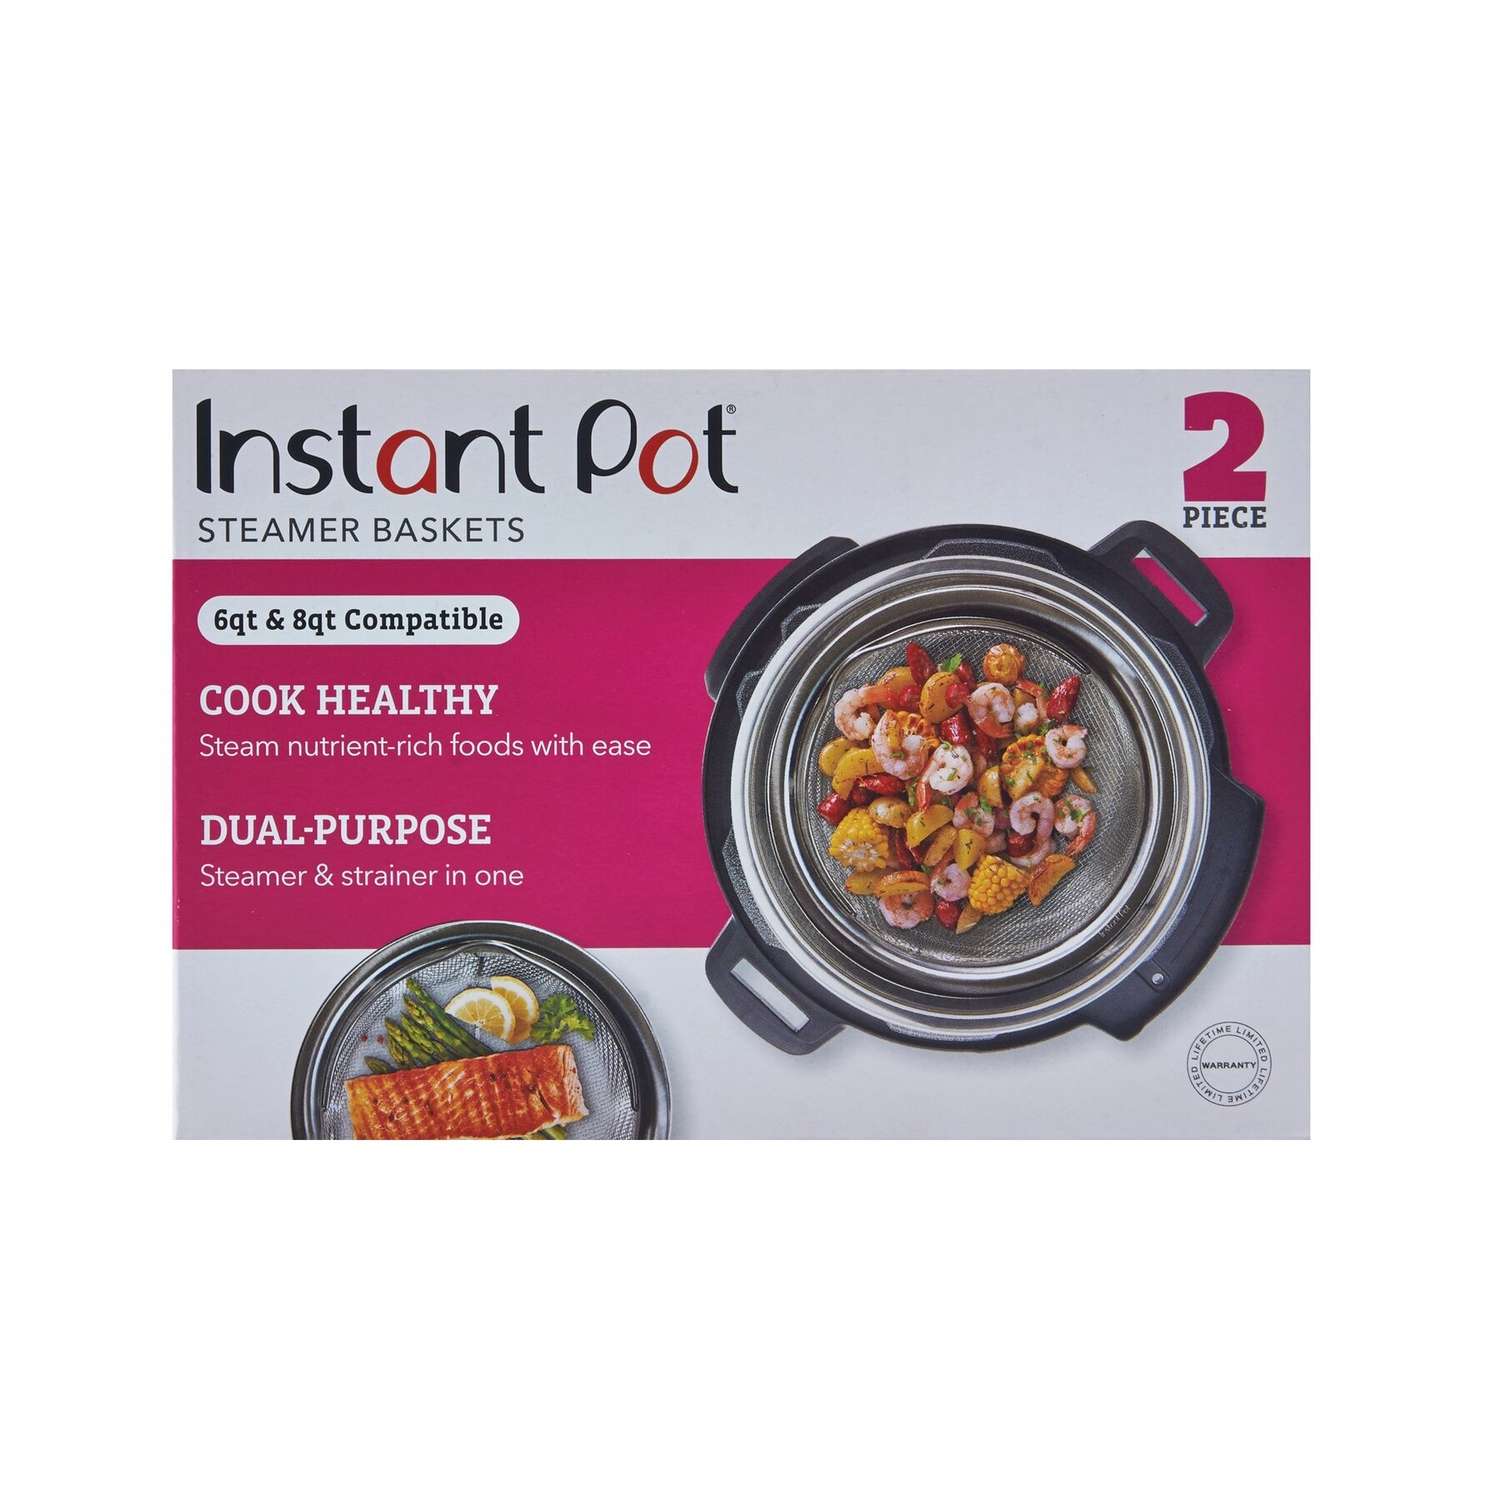 Instant Pot Cooking Accessory Set - 3 Piece 6qt & 8qt Compatible!